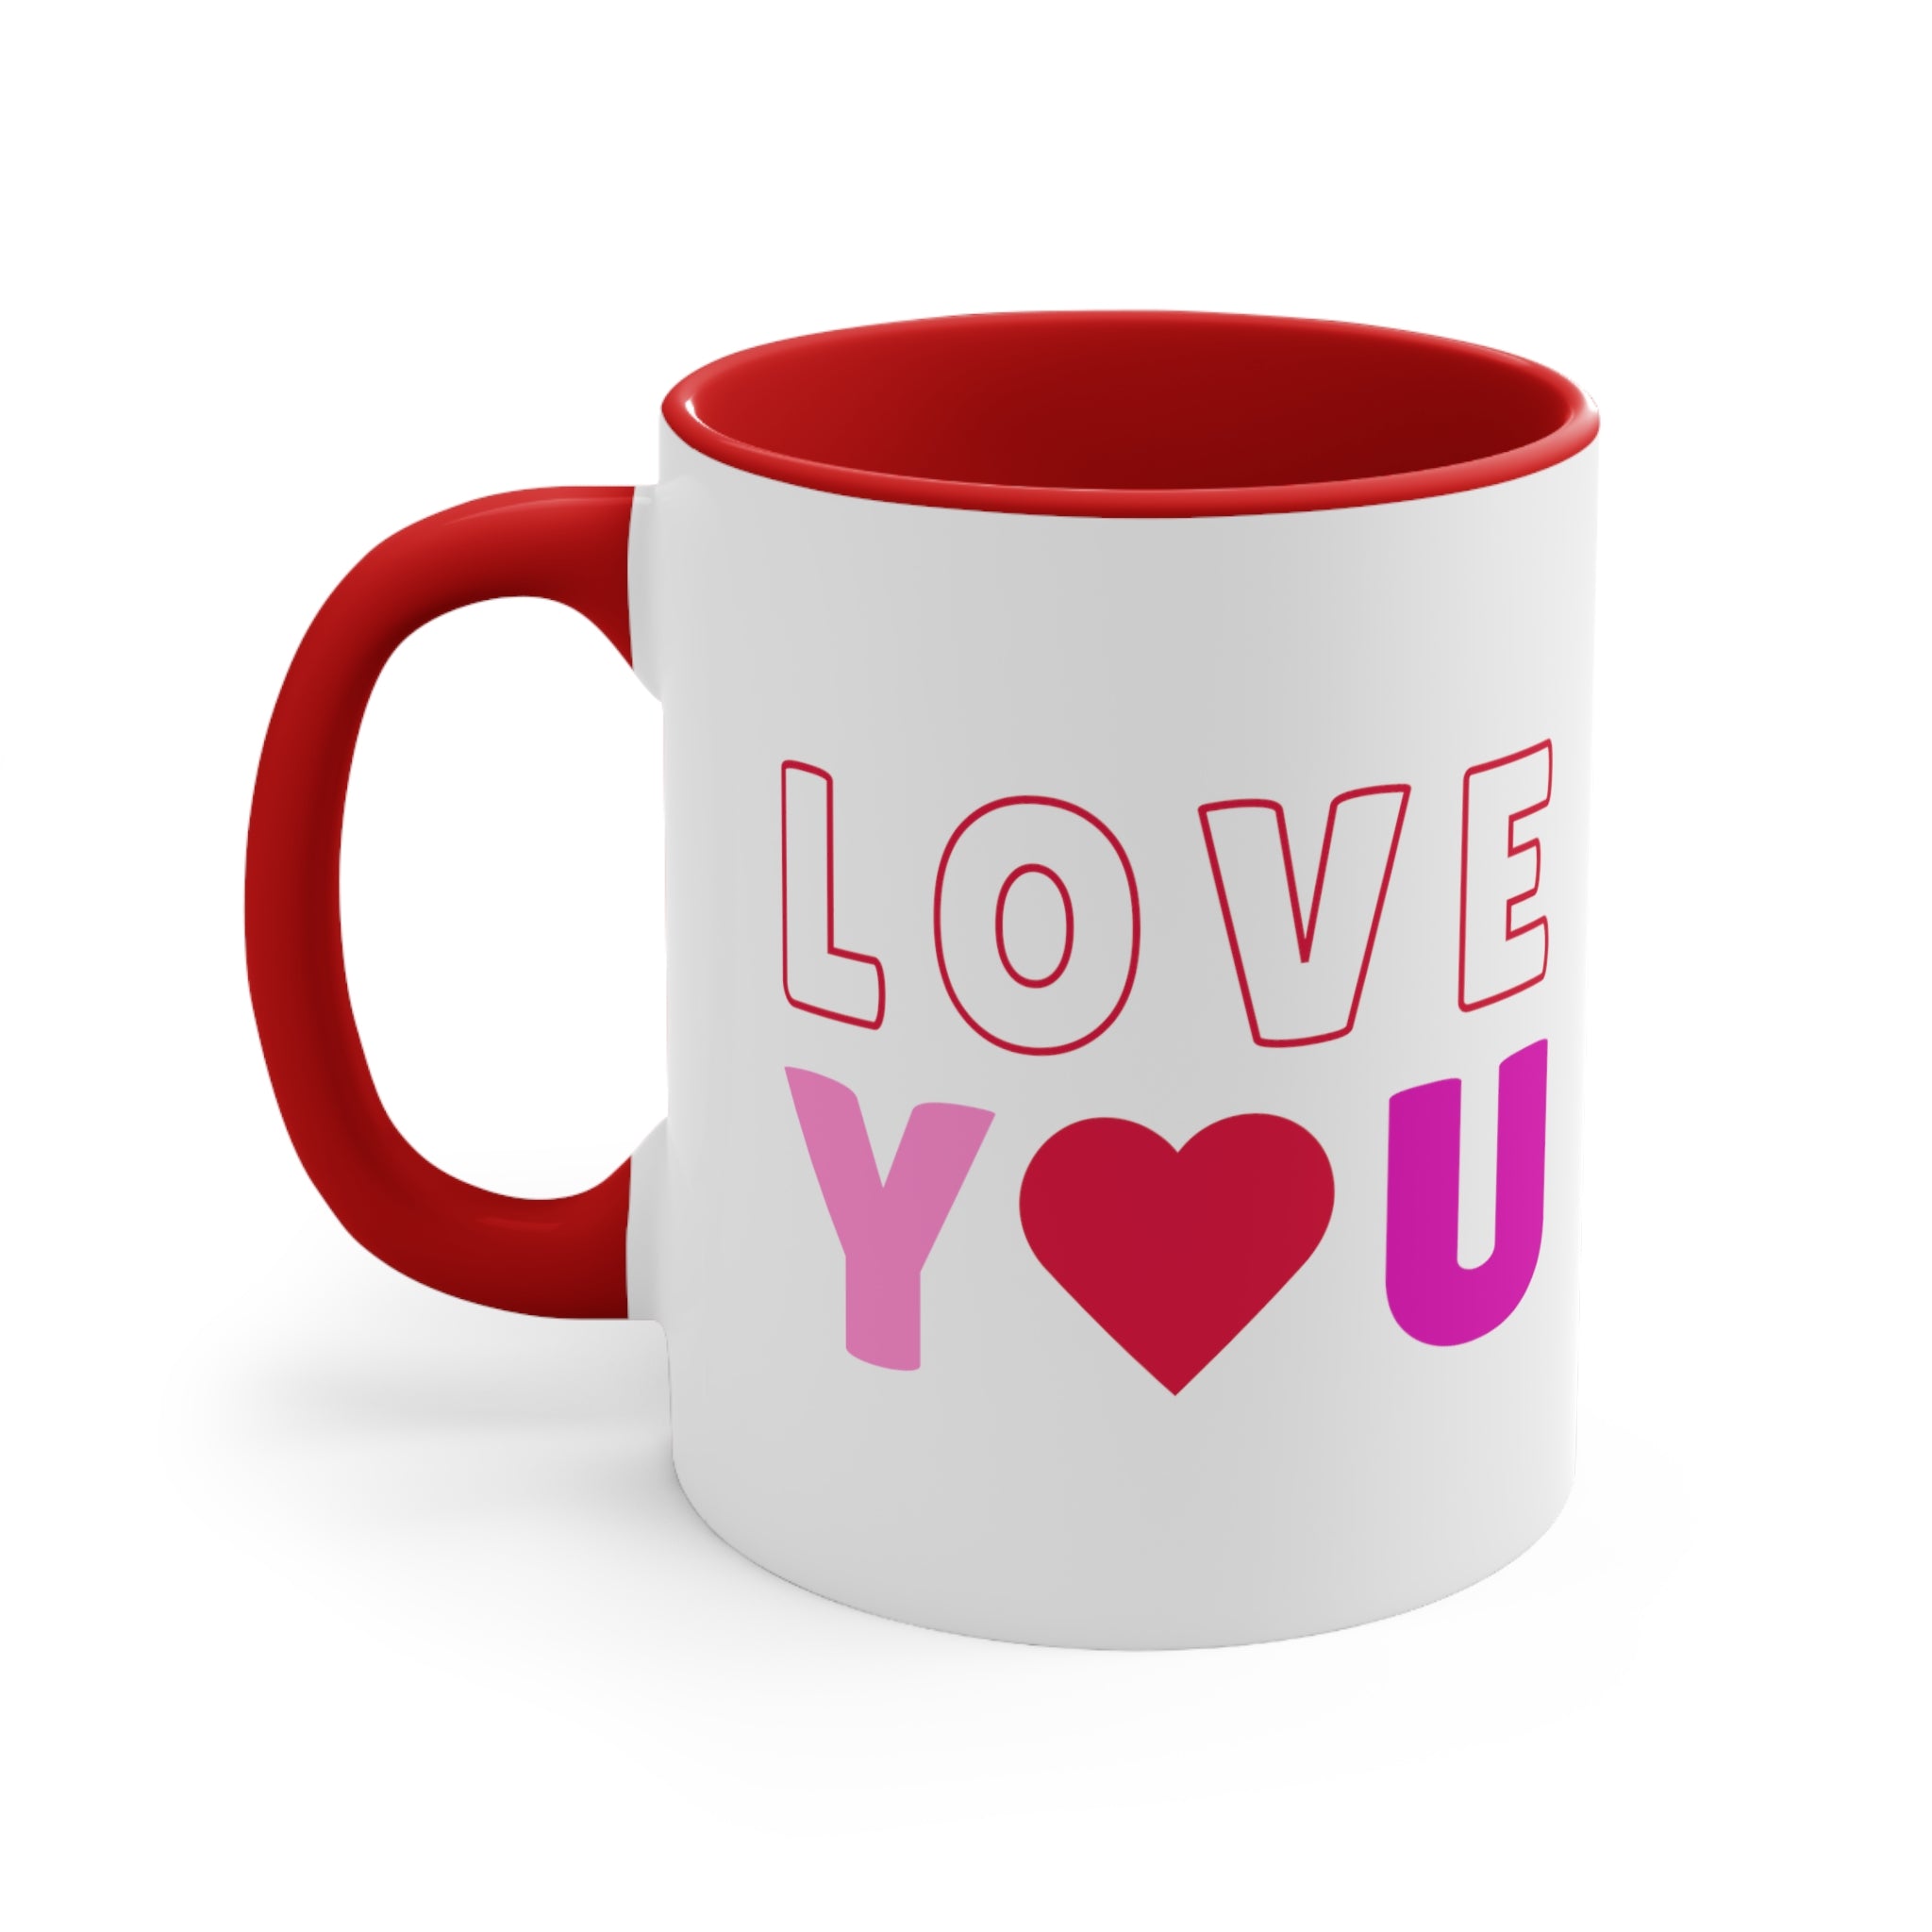 LOVE YOU by Awayday Ceramic Mug